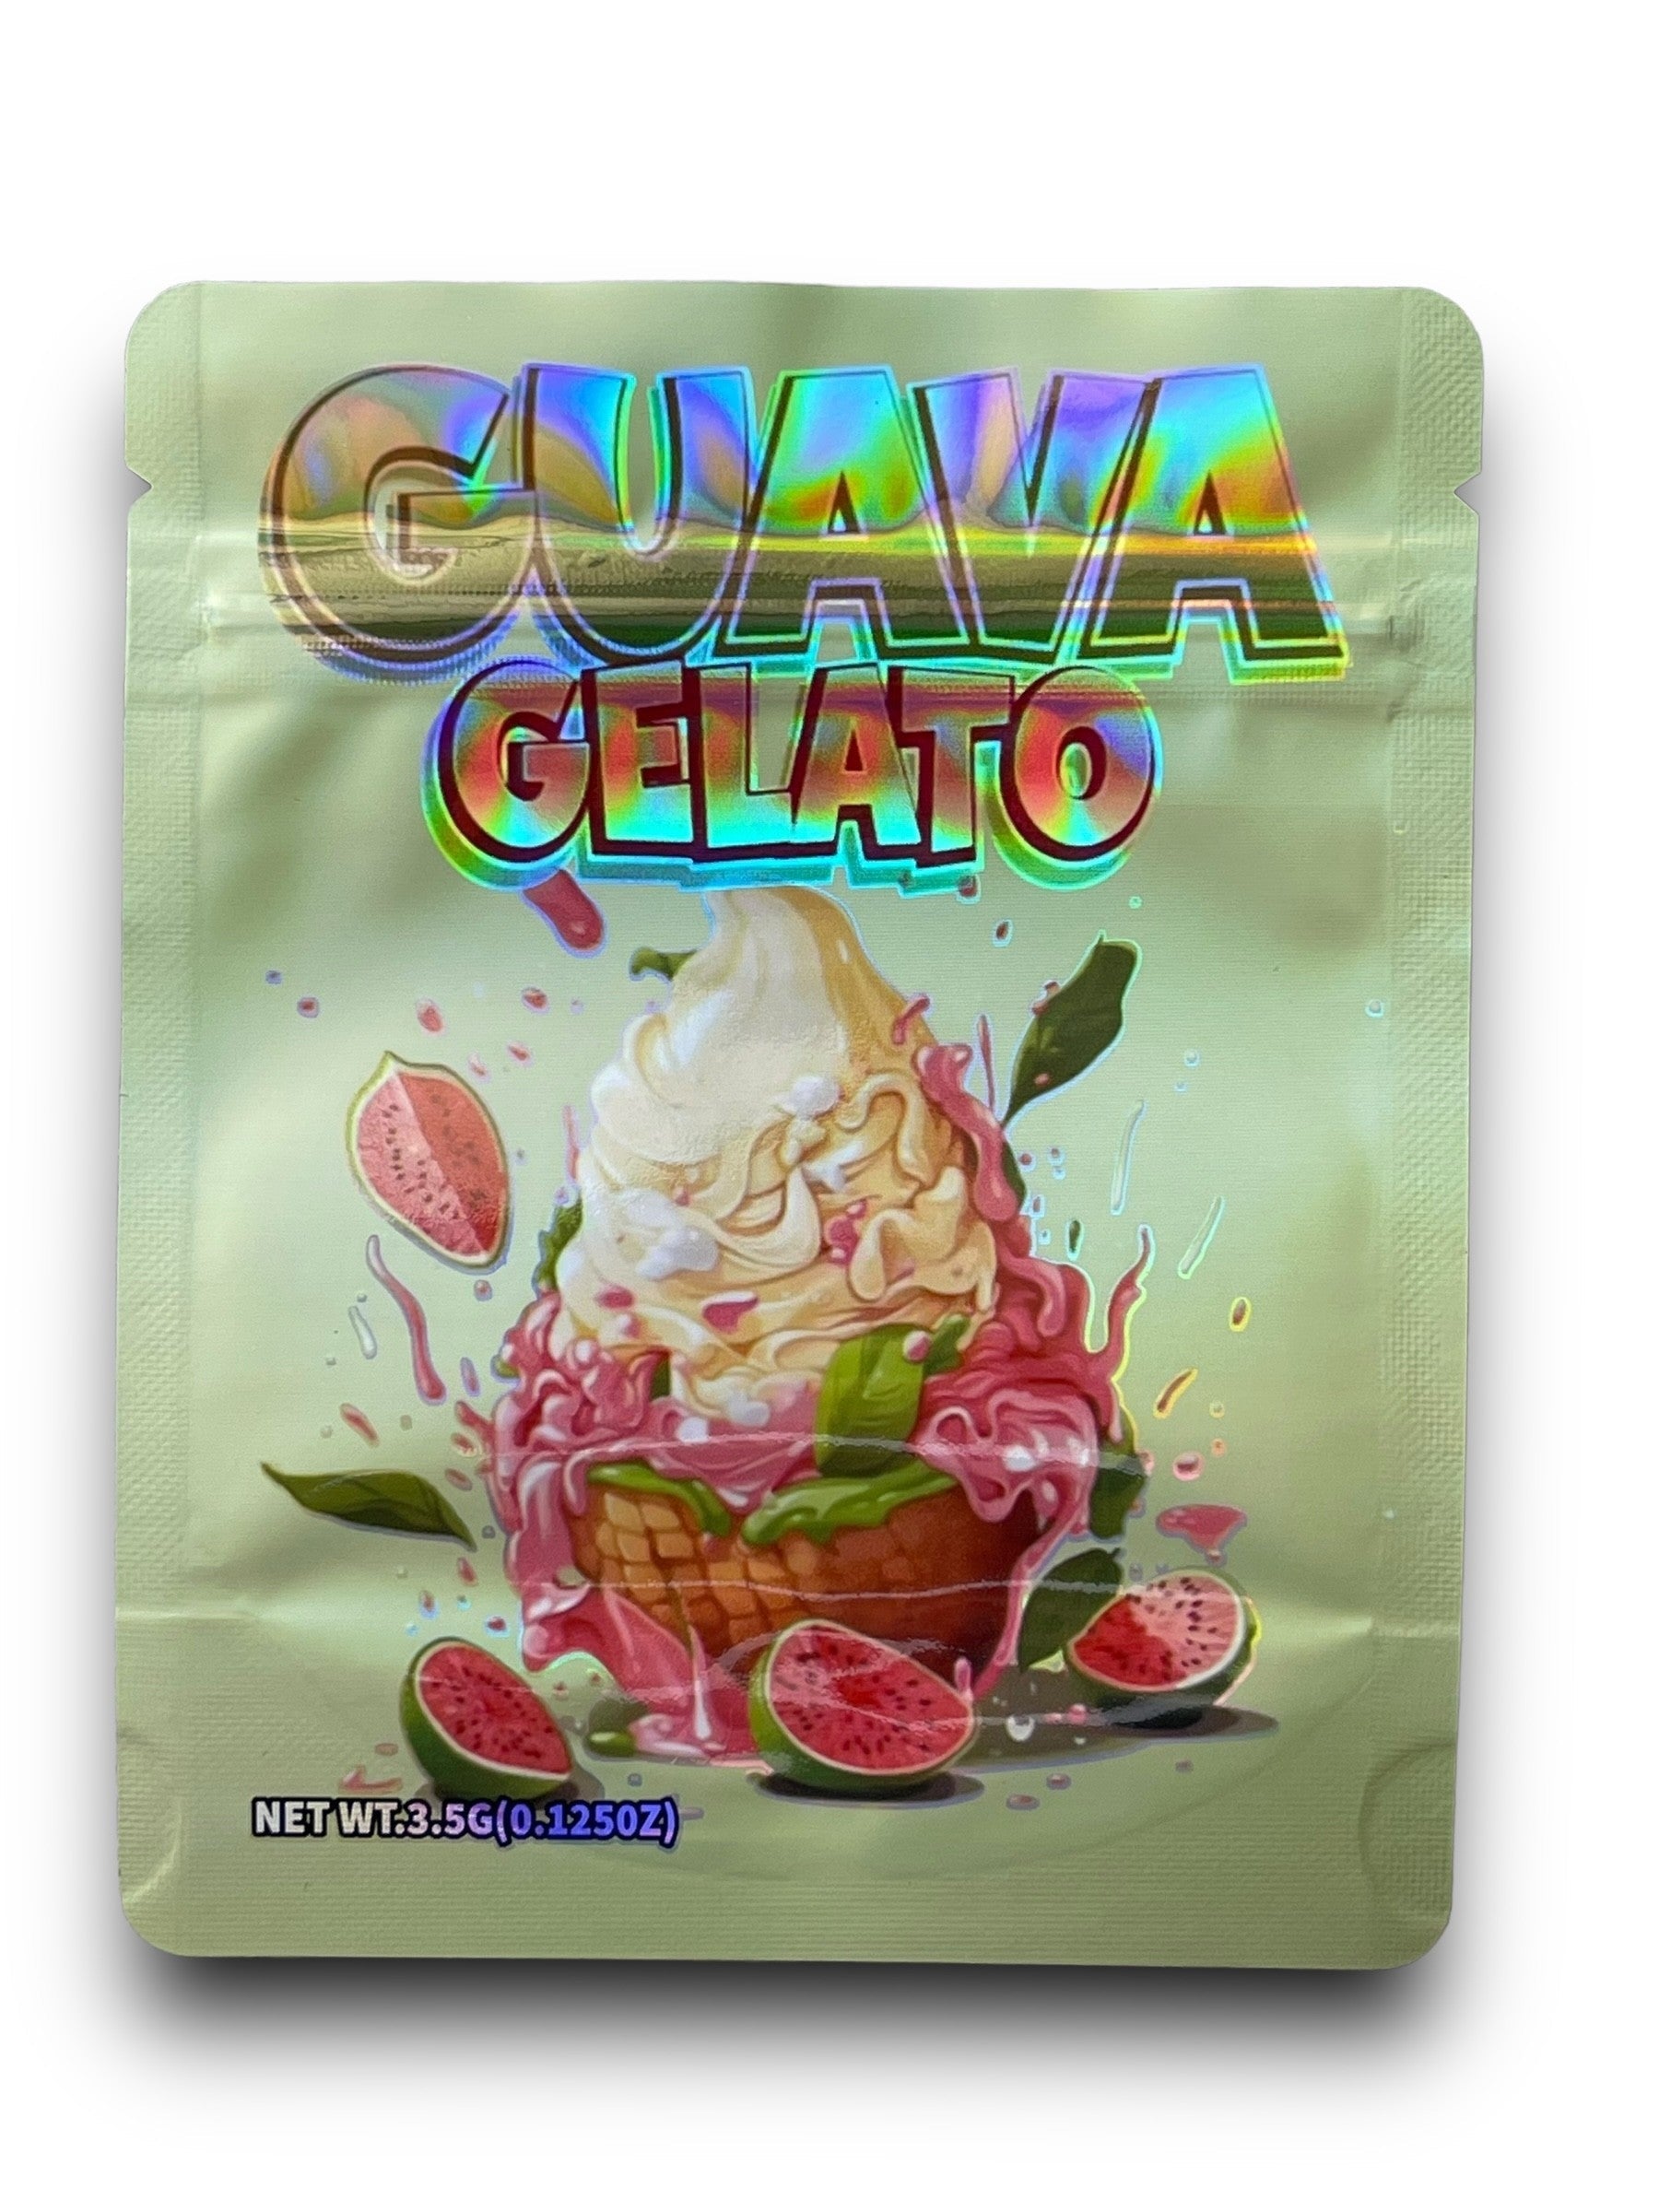 Guava Gelato 3.5G Mylar Bags Holographic